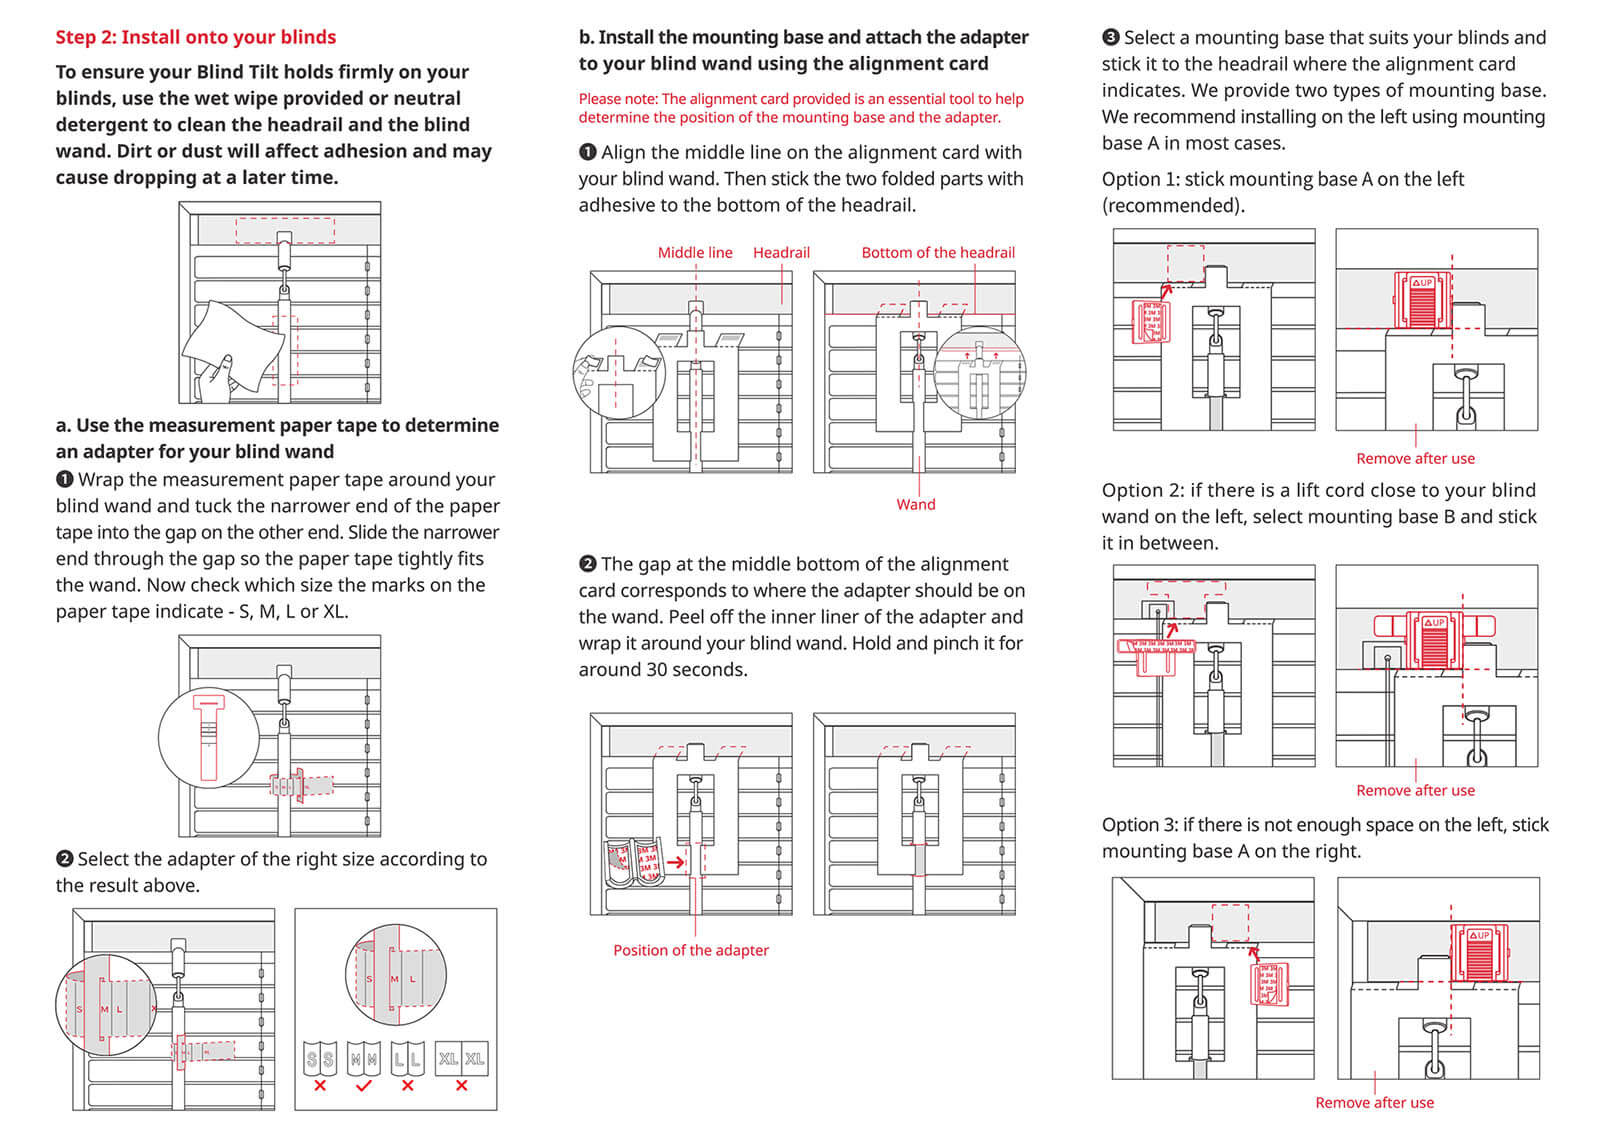 SwitchBot Blind Tilt Review  Installation Manual Part 1